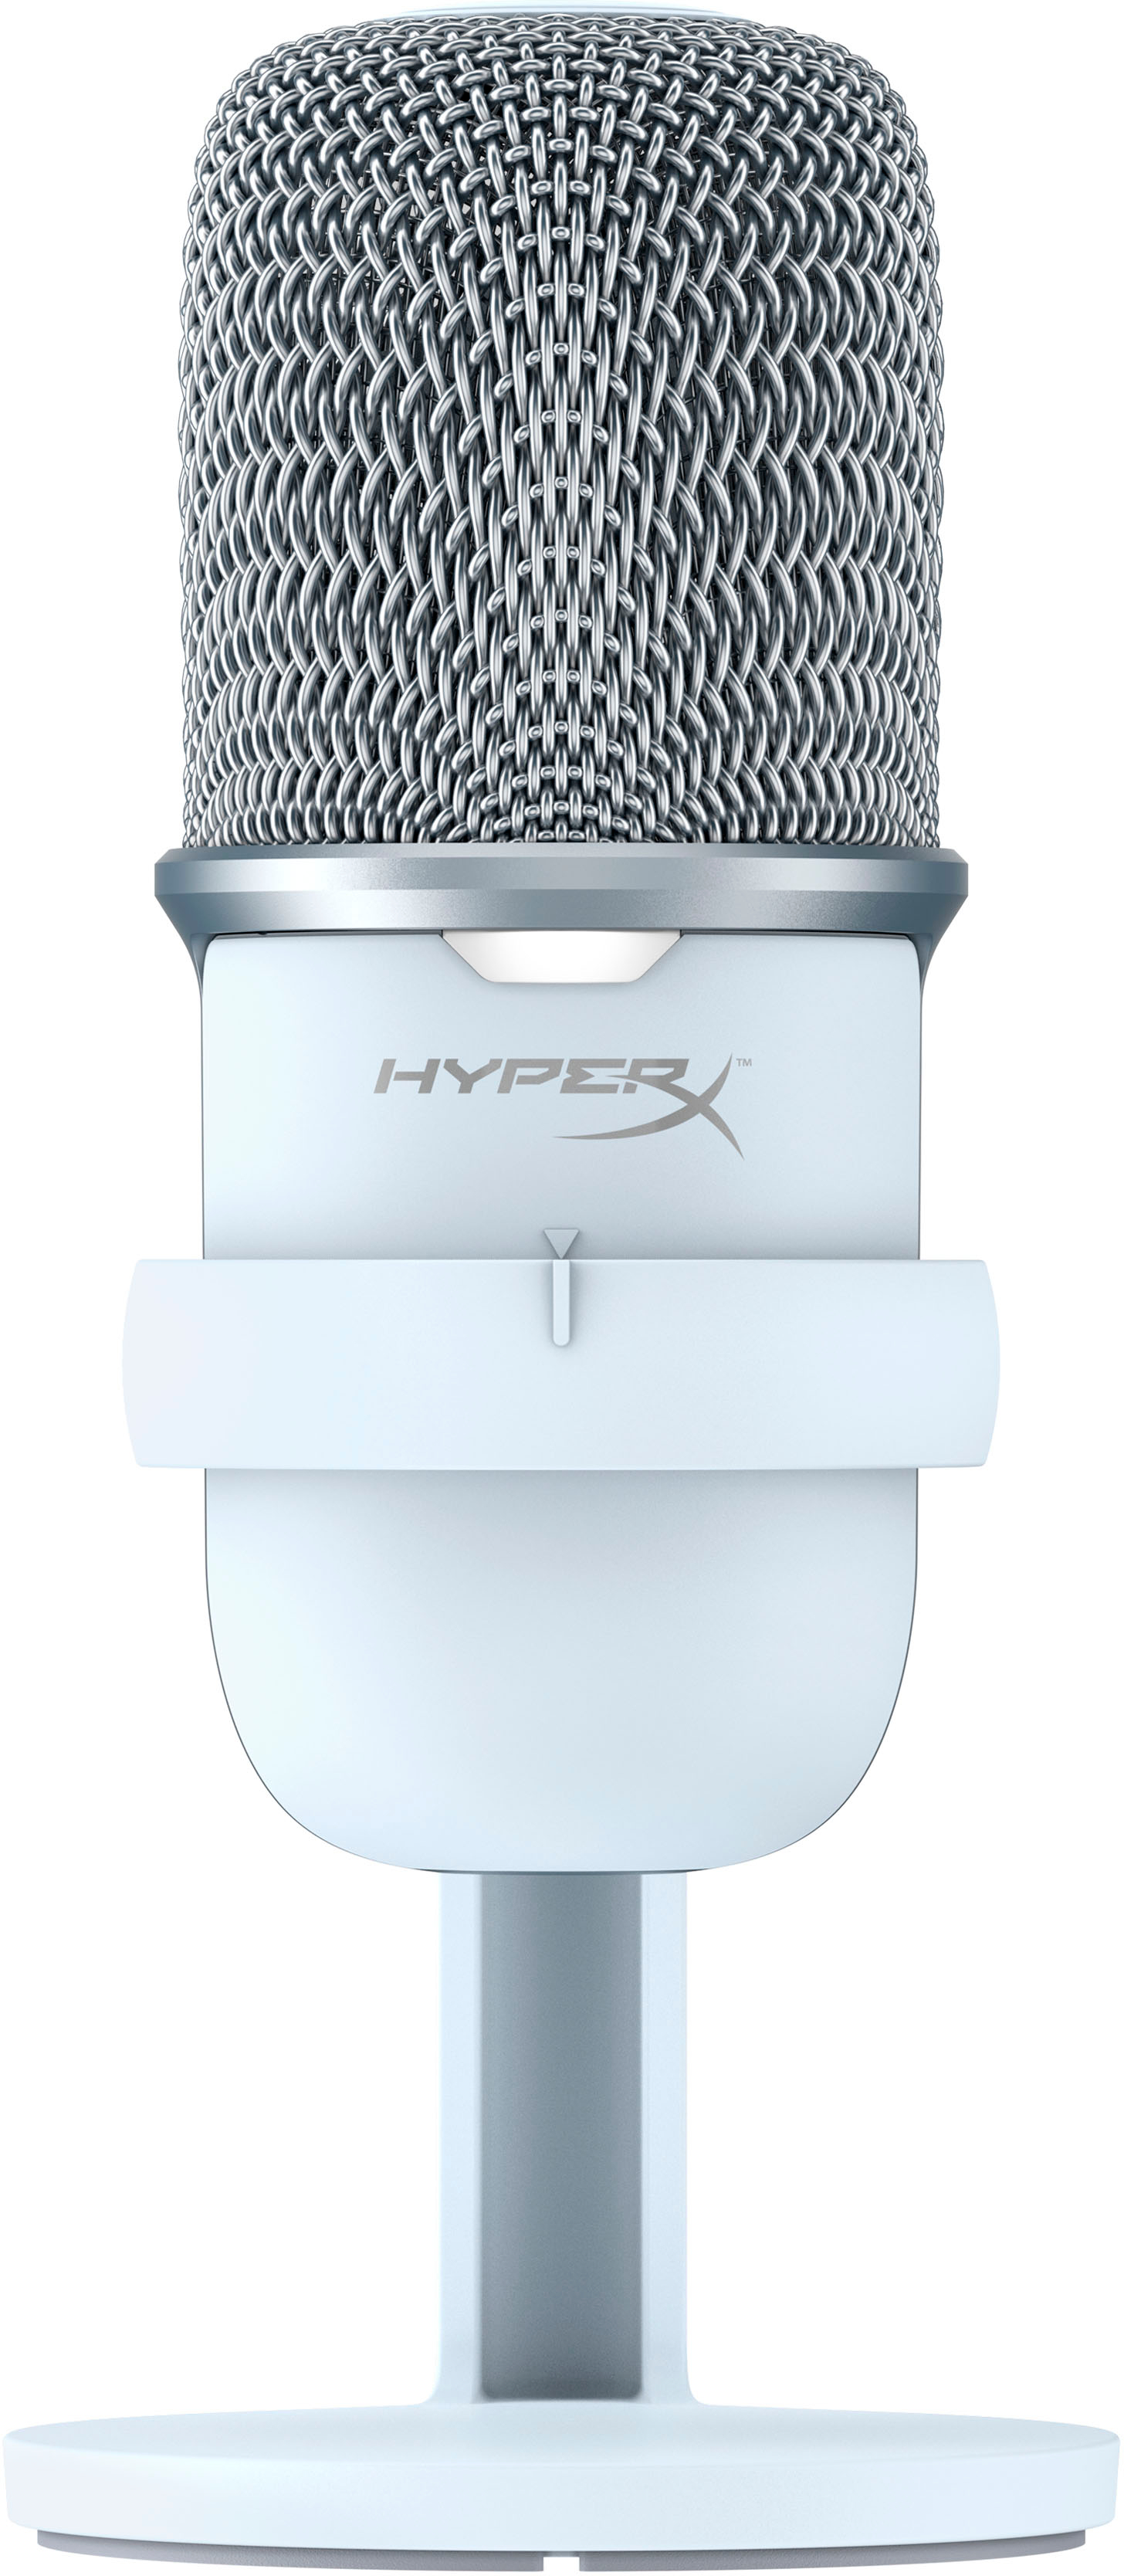 HyperX Quadcast vs HyperX Duocast with mic test comparison and features 